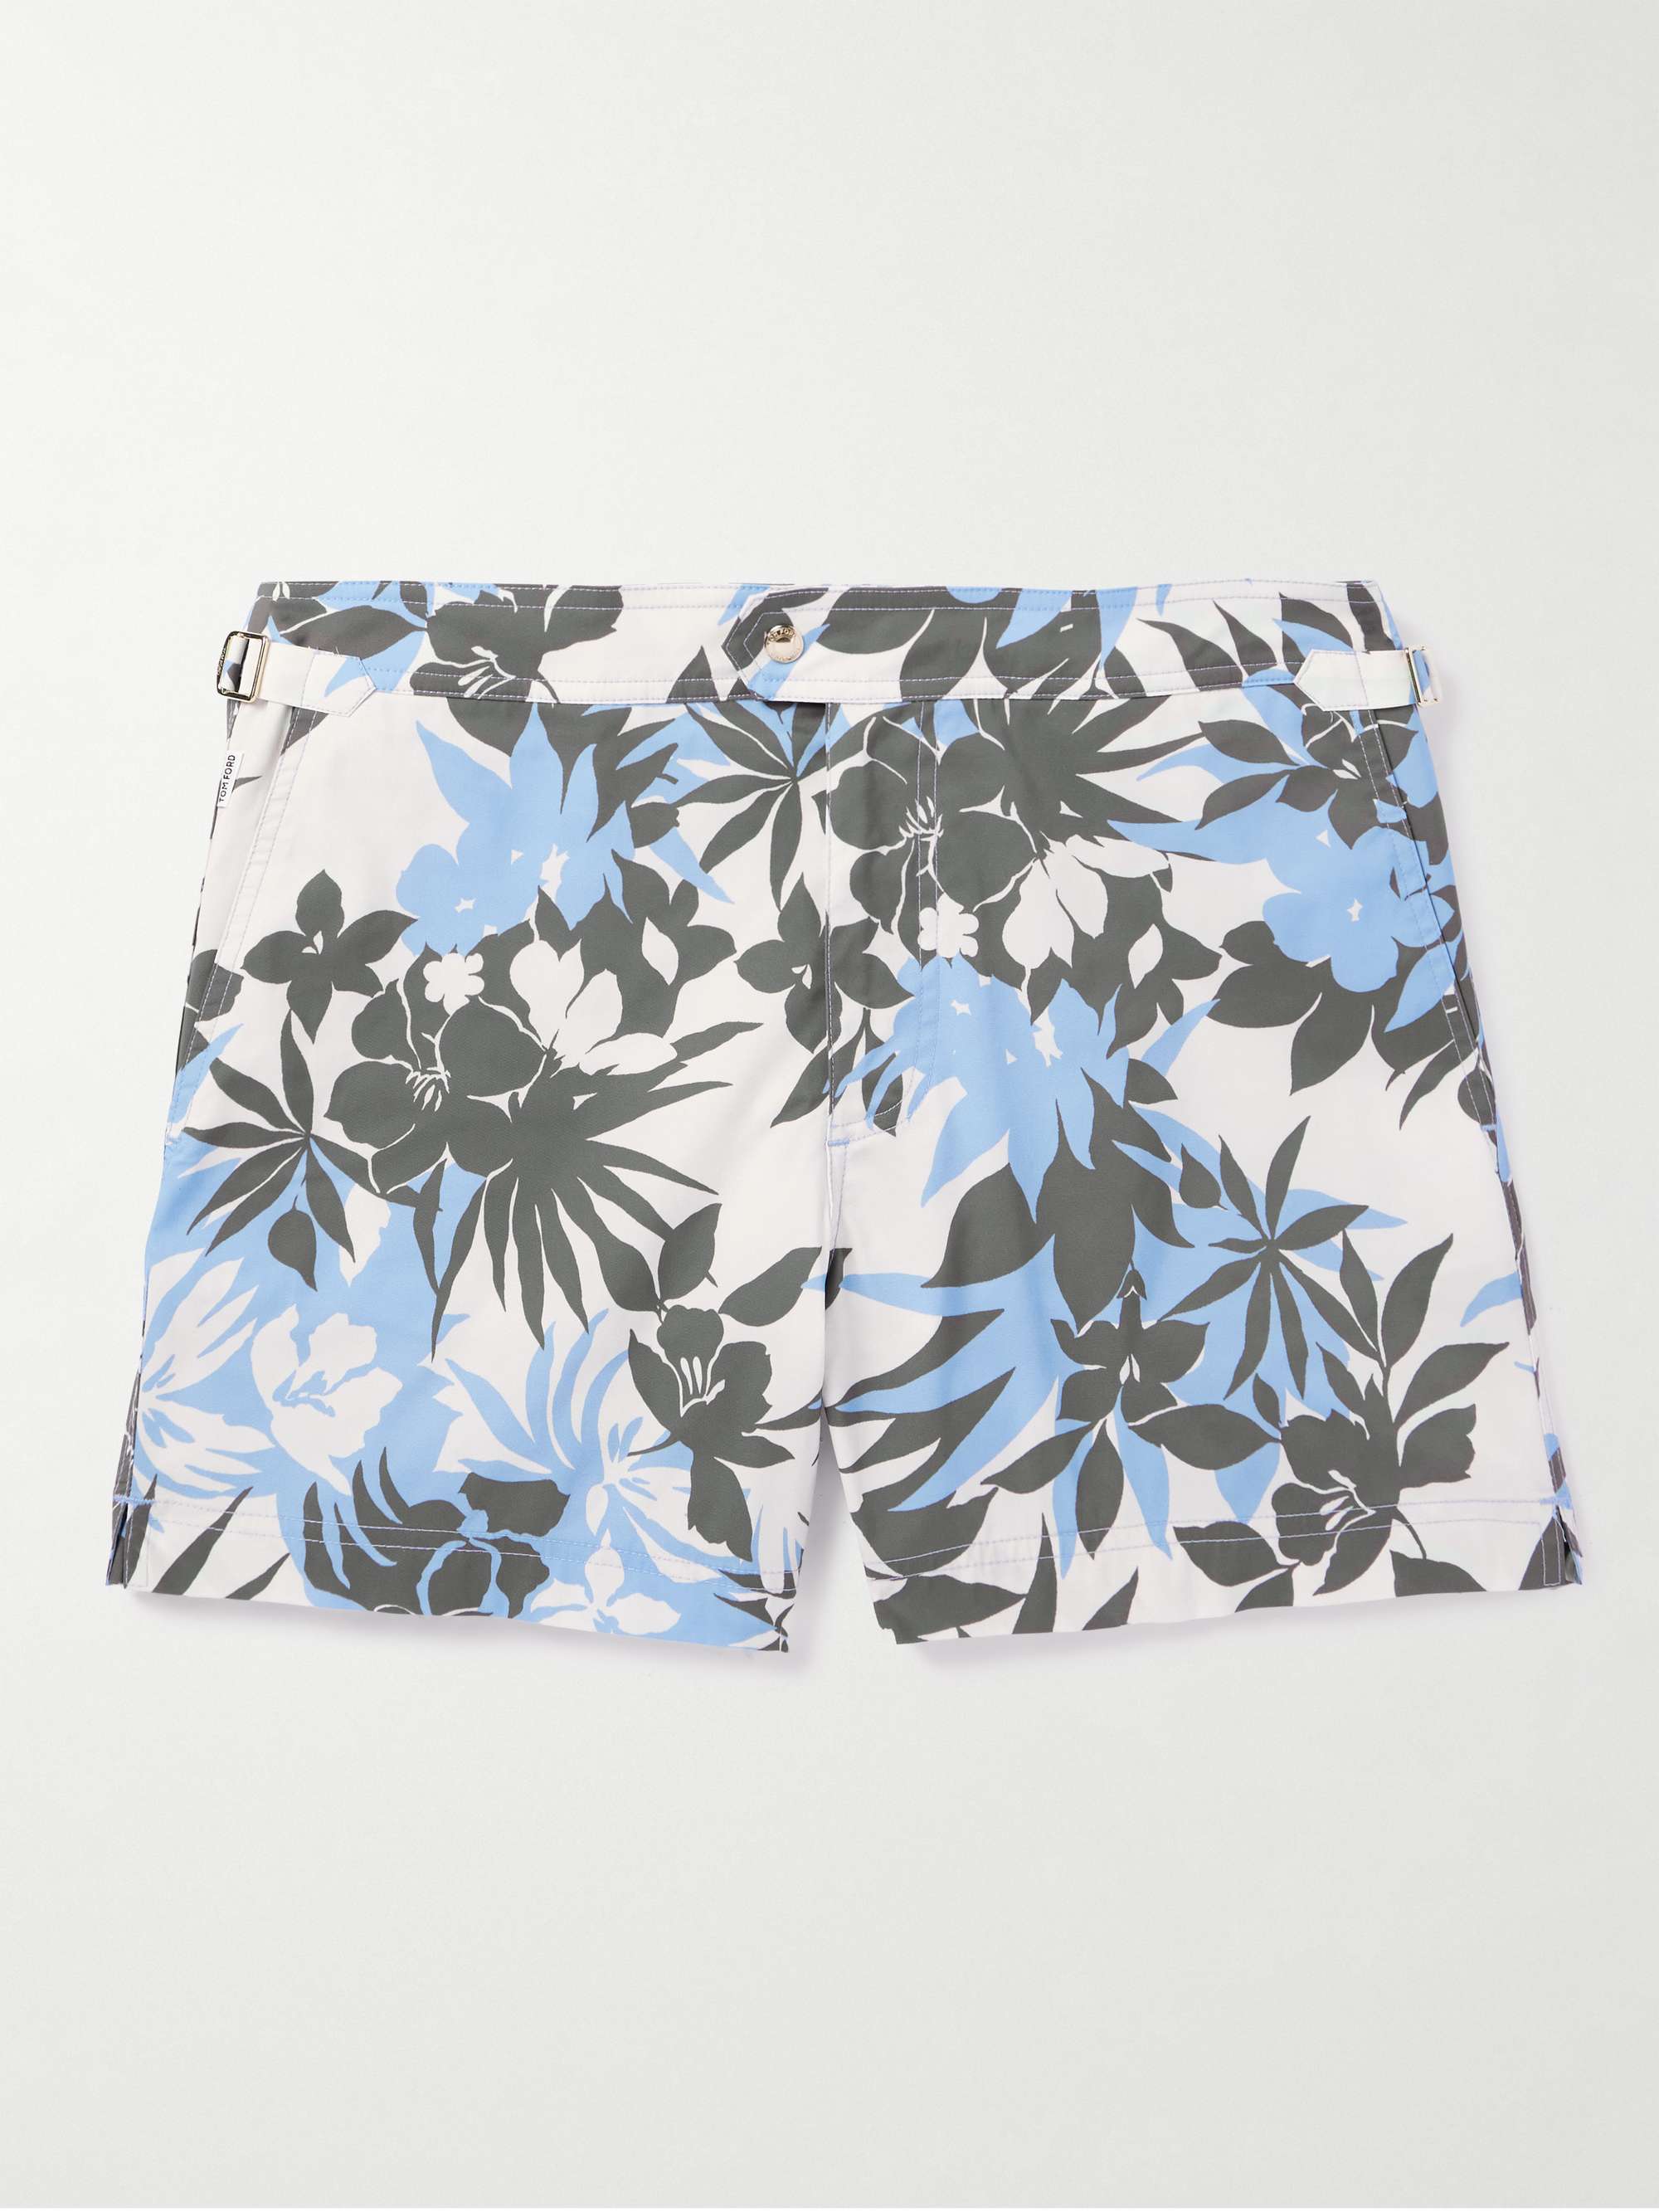 TOM FORD Slim-Fit Short-Length Floral-Print Swim Shorts for Men | MR PORTER